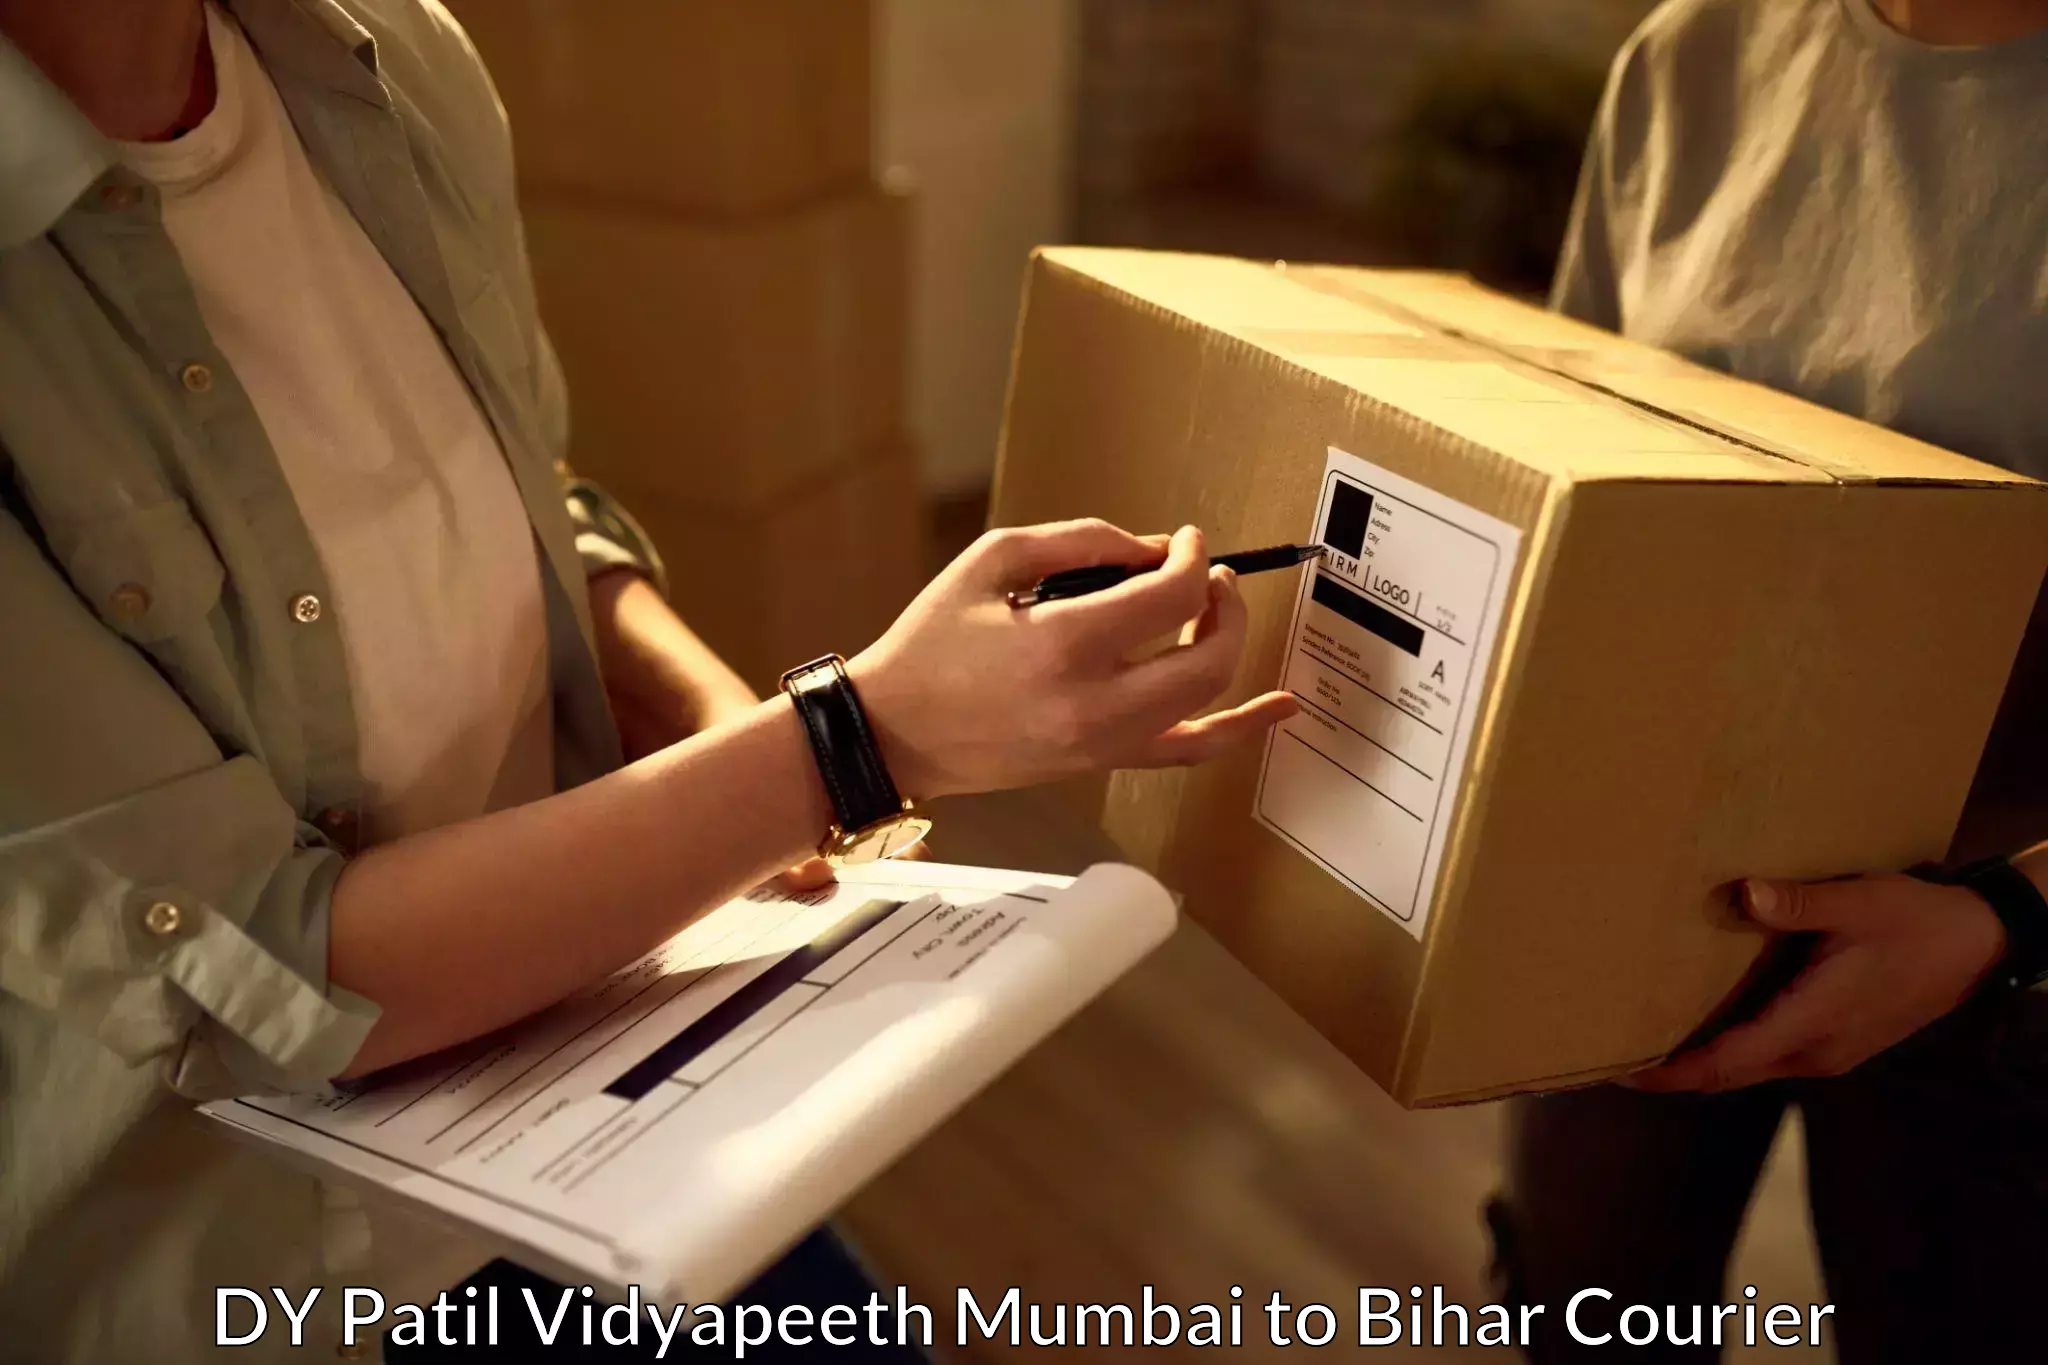 Business delivery service DY Patil Vidyapeeth Mumbai to Minapur